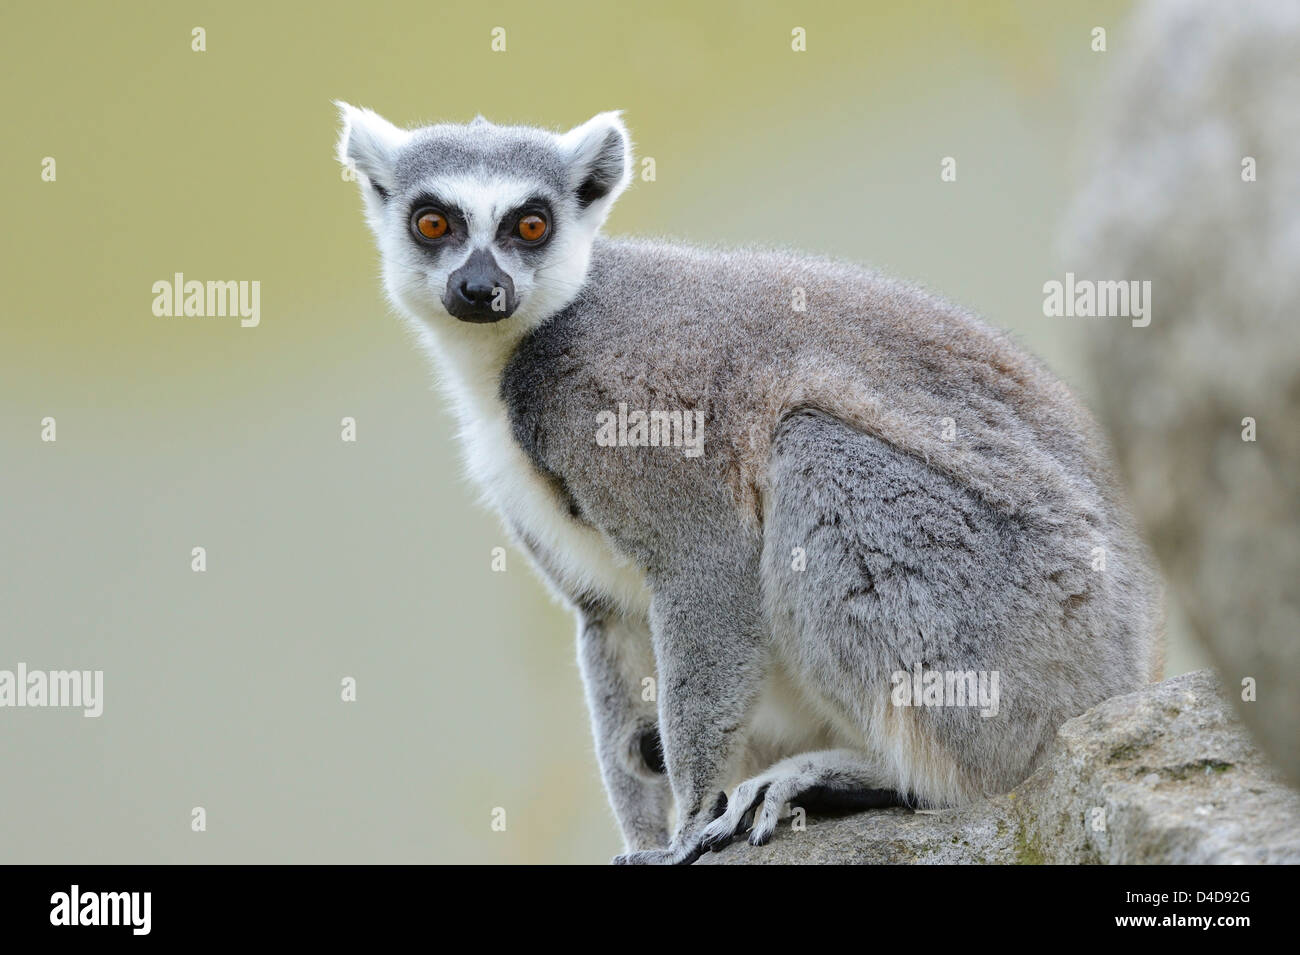 Ring-tailed lemur (Lemur catta) in Augsburg Zoo, Germany Stock Photo